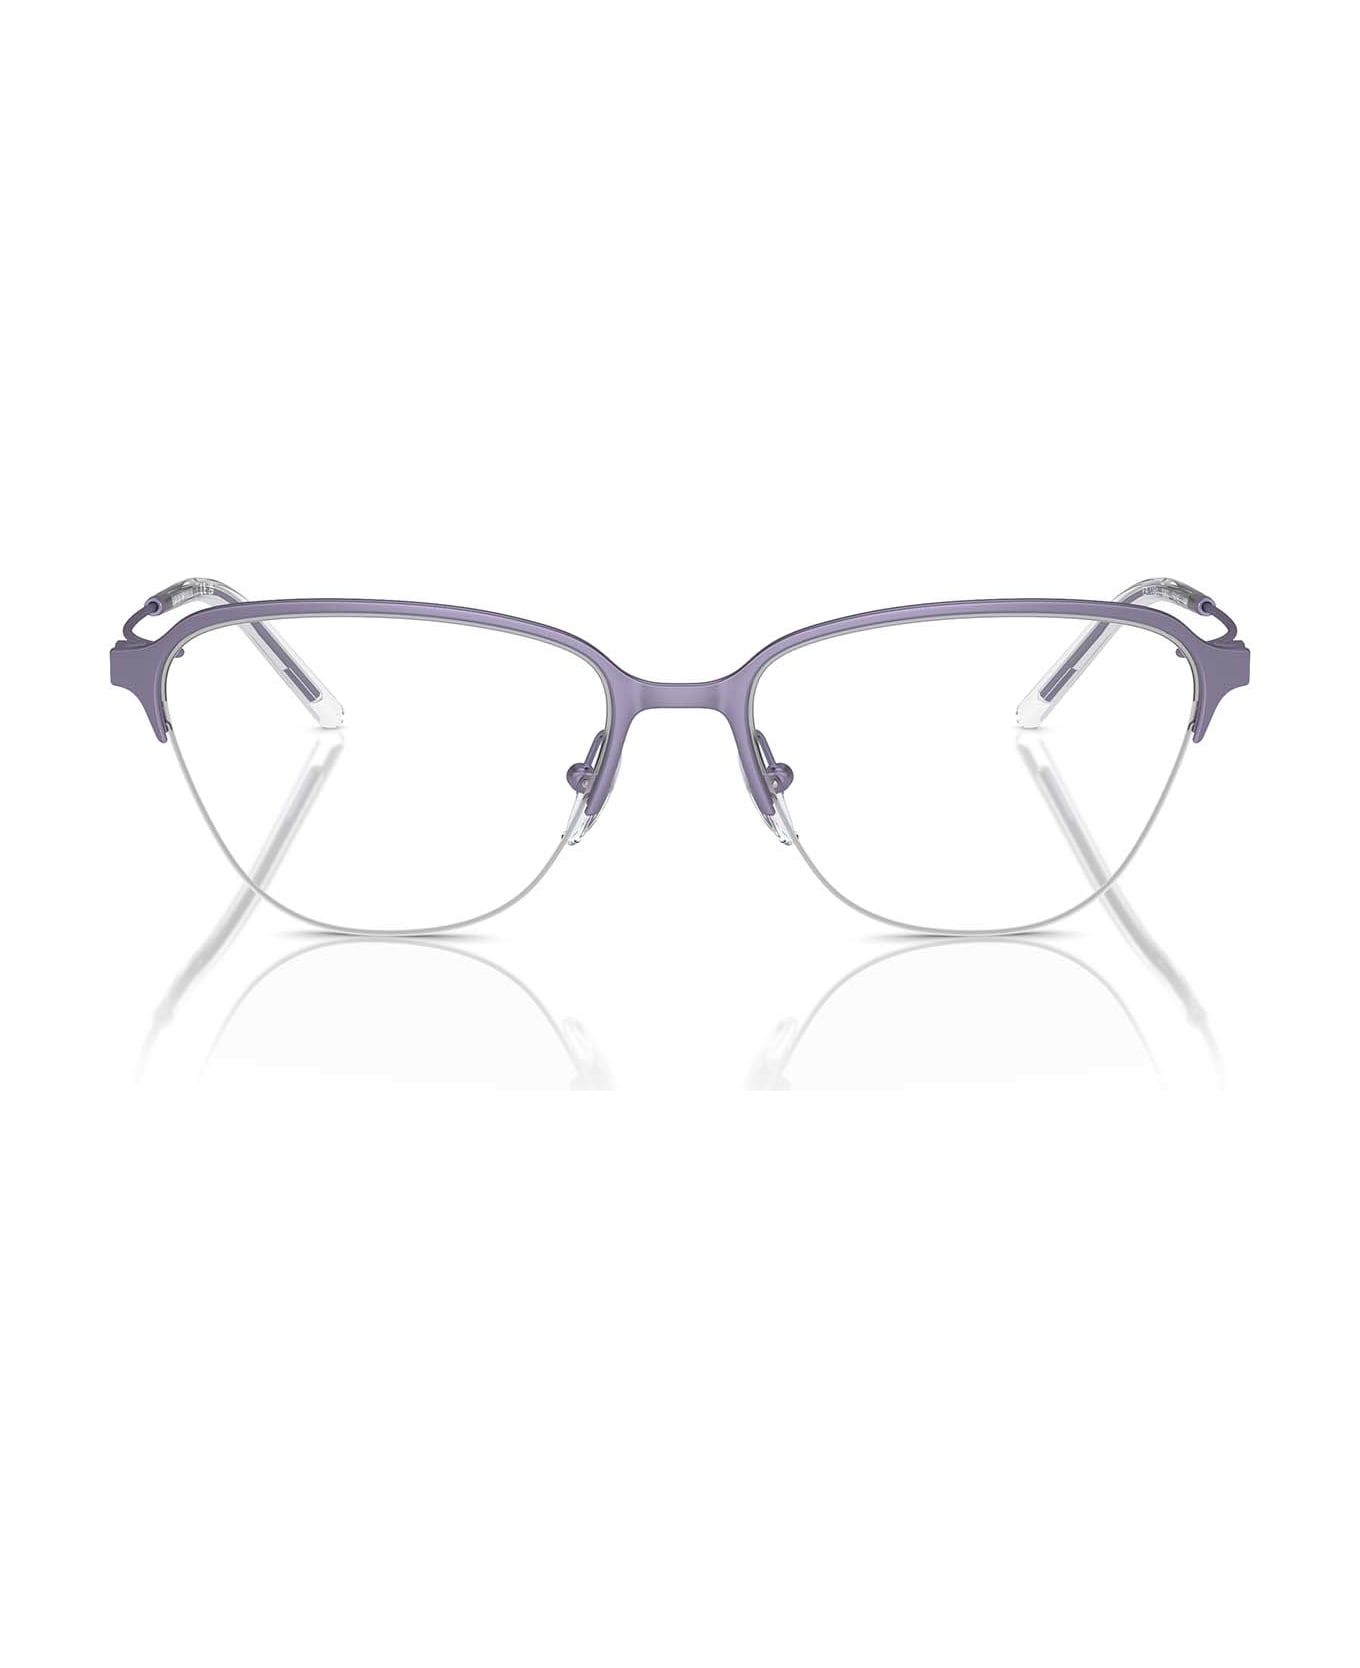 Emporio Armani Ea1161 Shiny Lilac Glasses - Shiny Lilac アイウェア